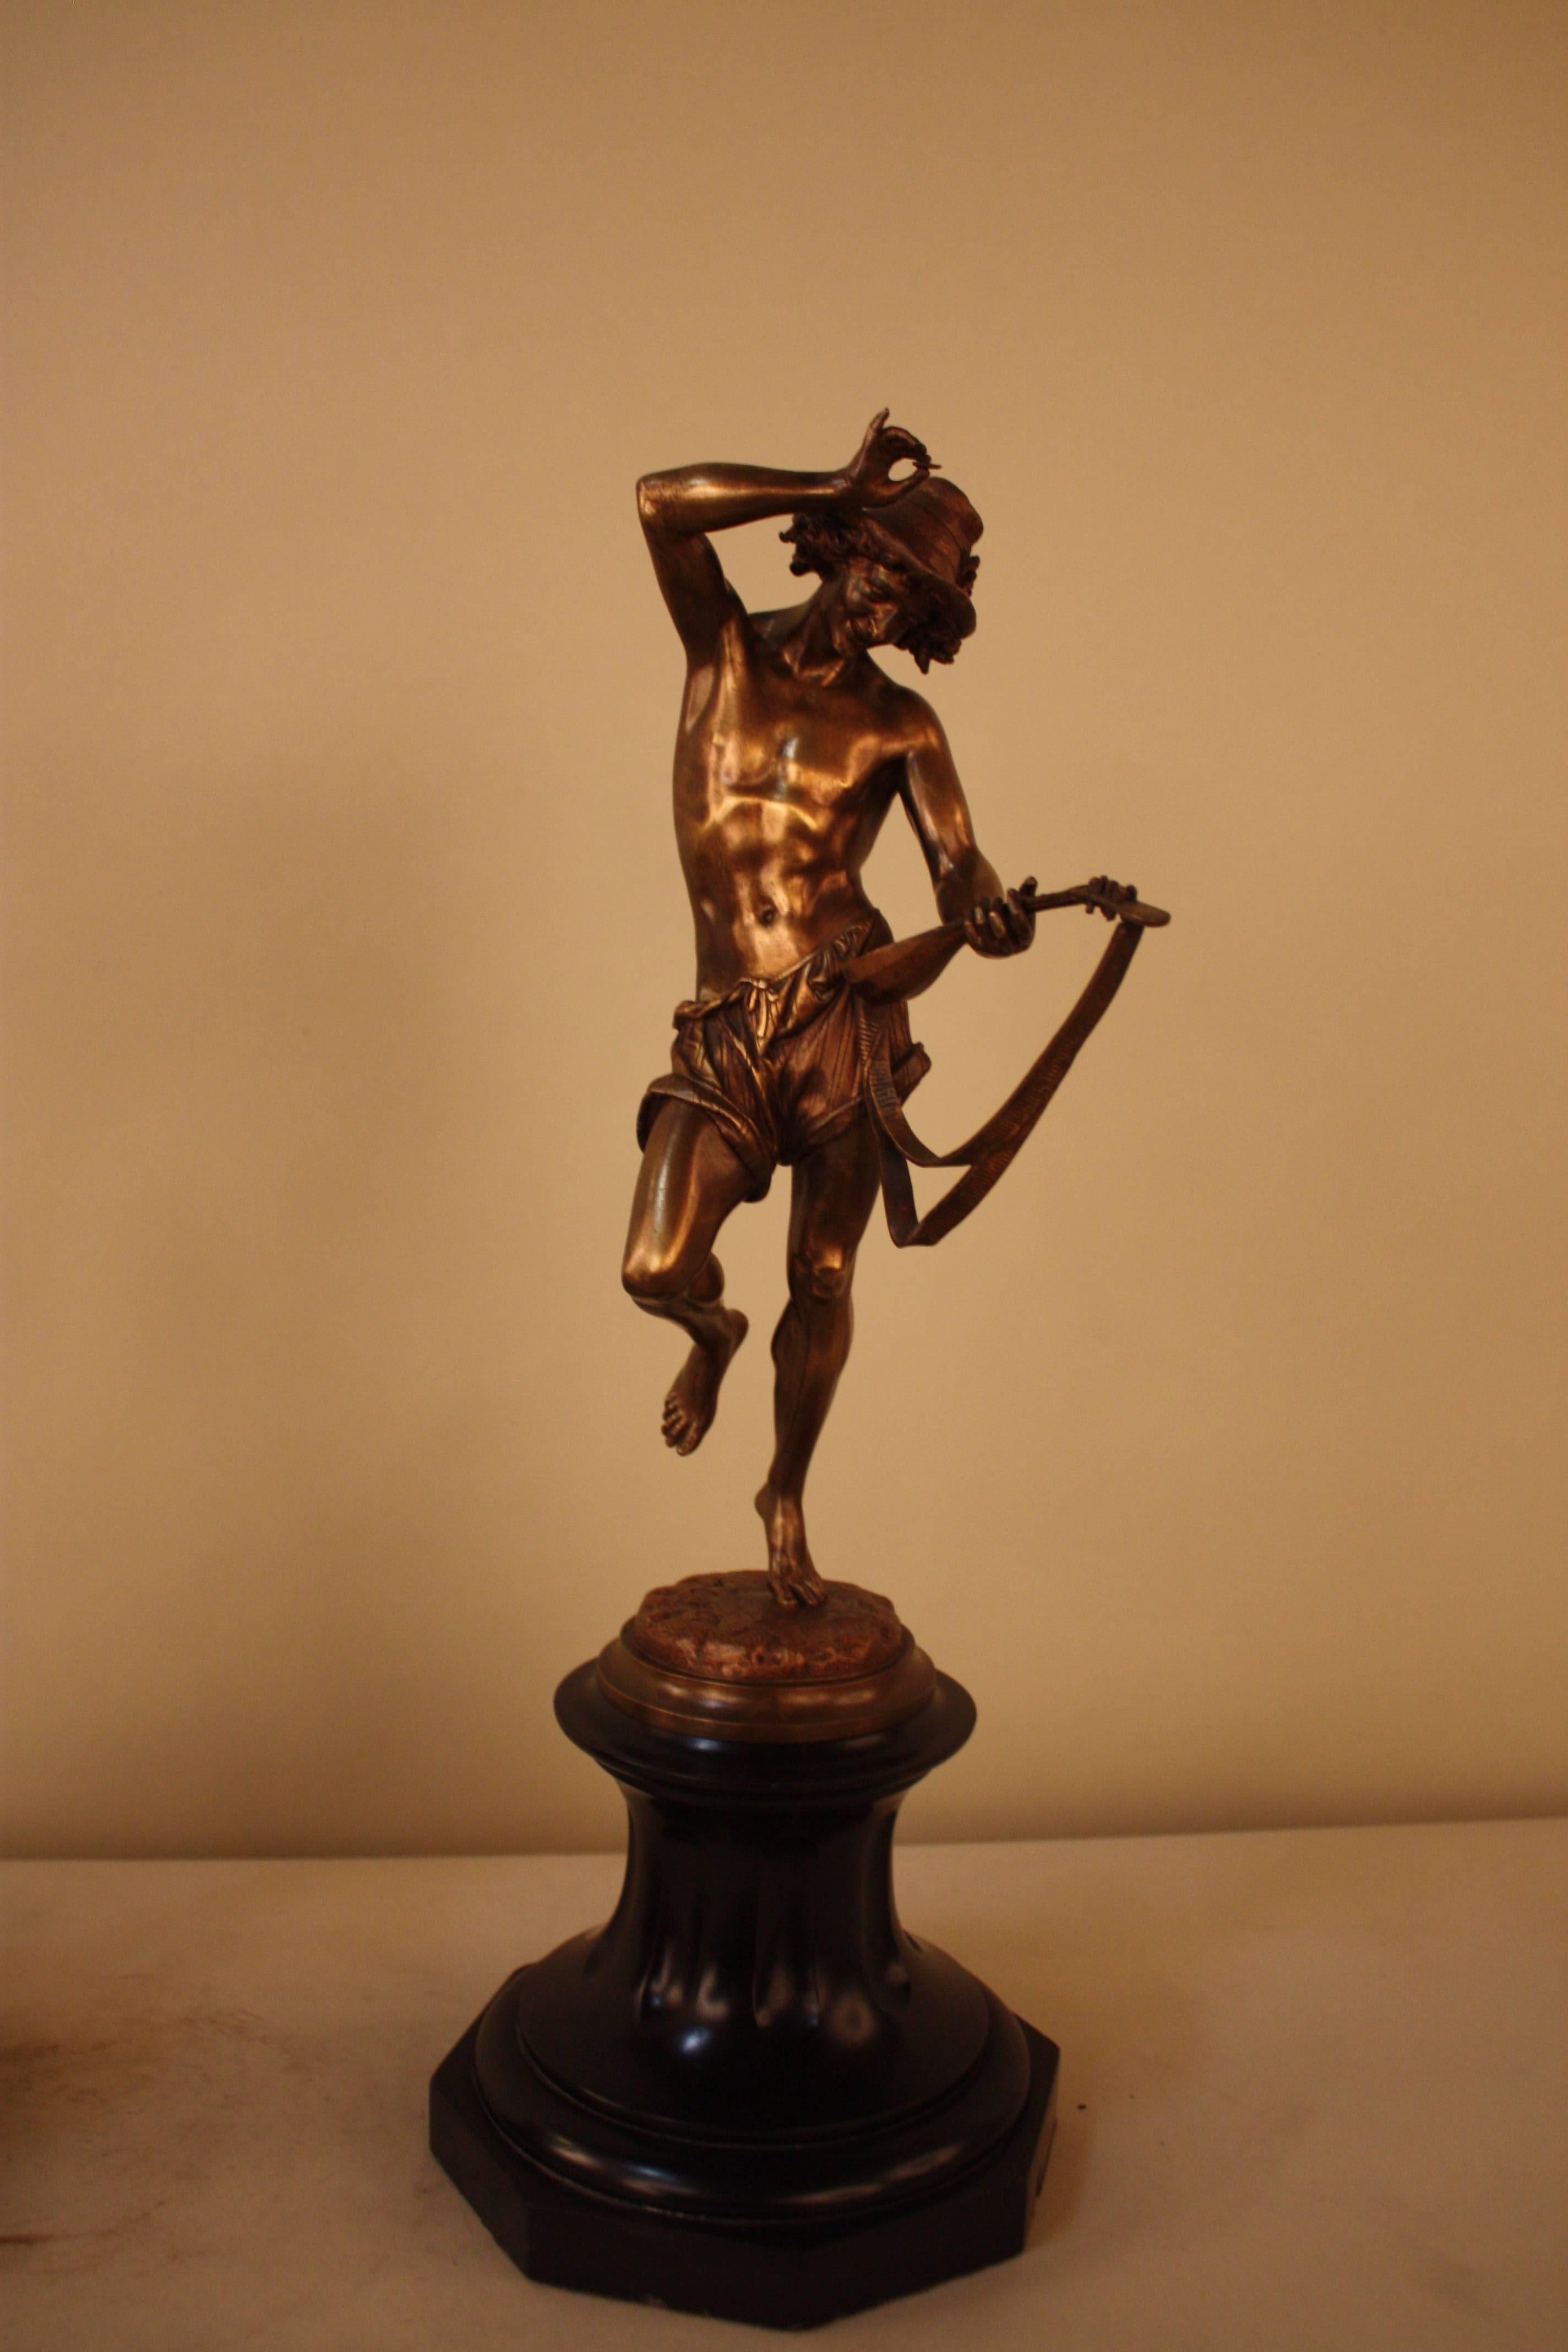 Albert Ernest Carrier Belleuse, 1824-1887. Pair of bronze dancer.
Le Danseur Napolitain. Pair of bronze sculptures on black marble.